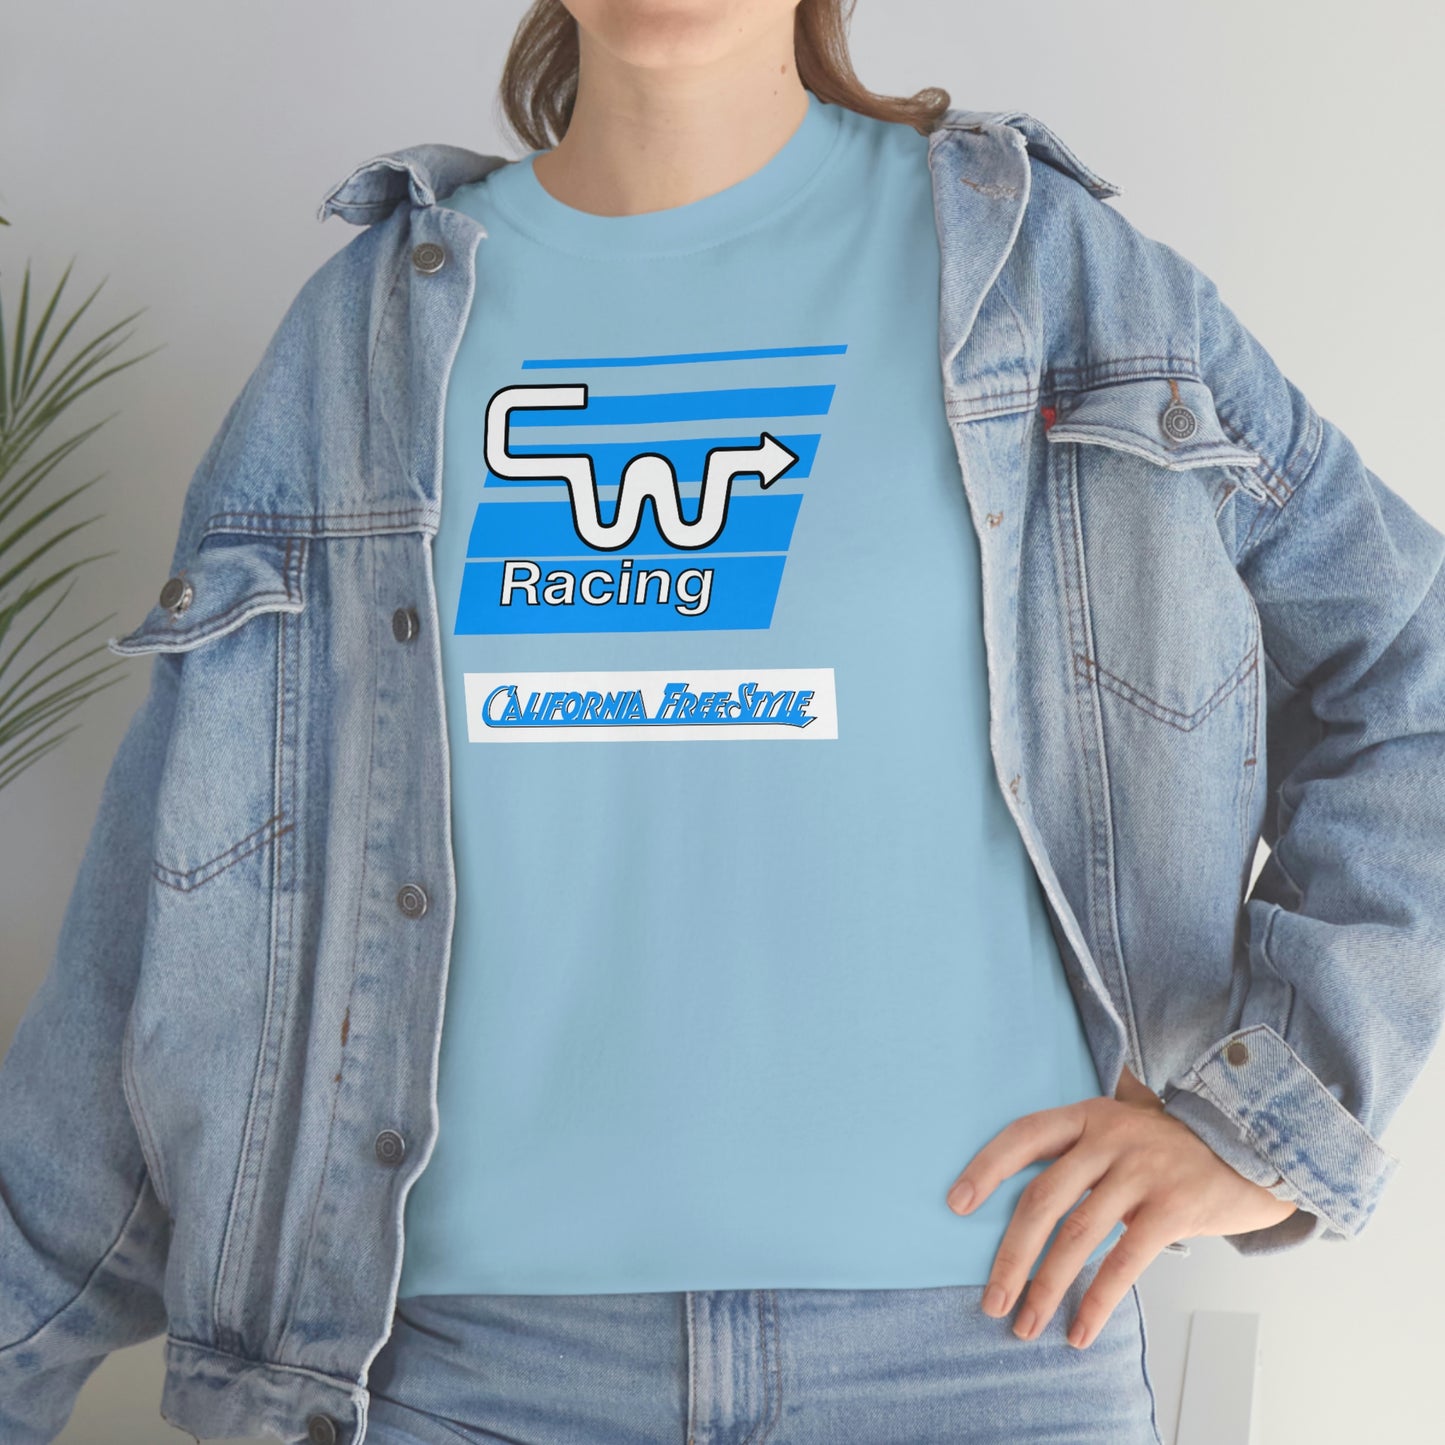 CW Racing T-Shirt